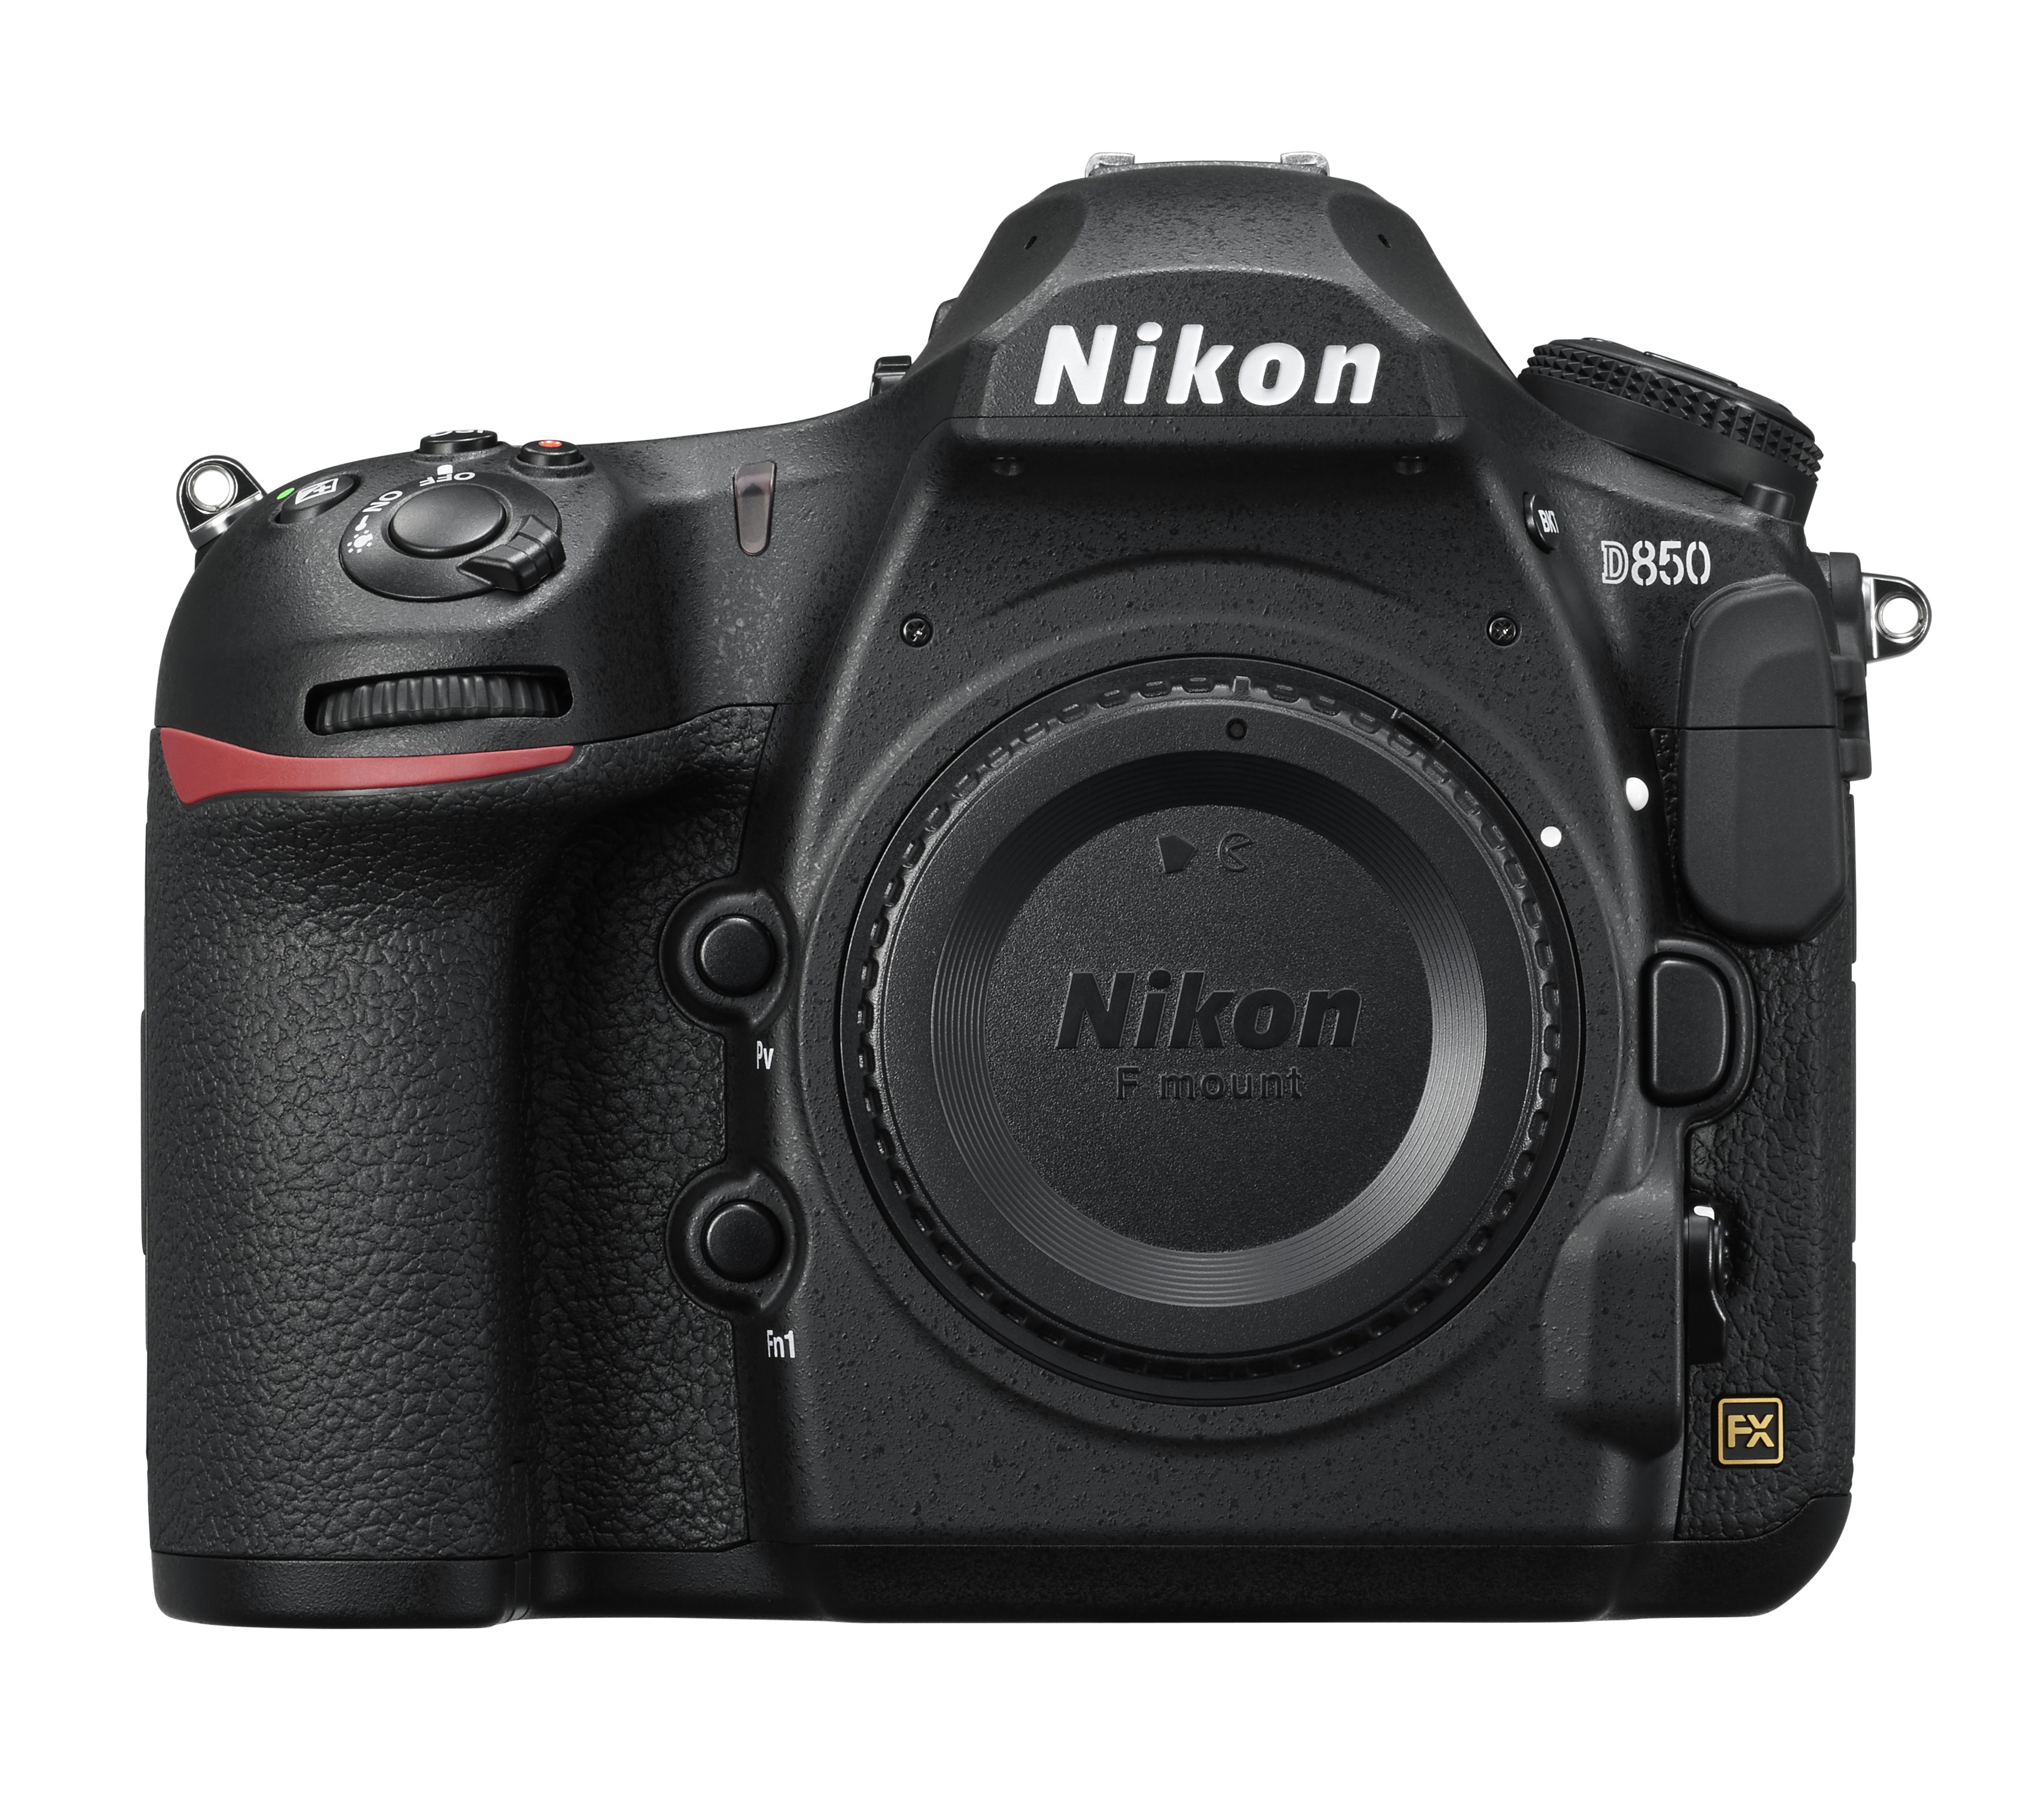 NIKON D850 Spiegelreflexkamera, WLAN, Schwarz Touchscreen Display, Megapixel, Body 45,7